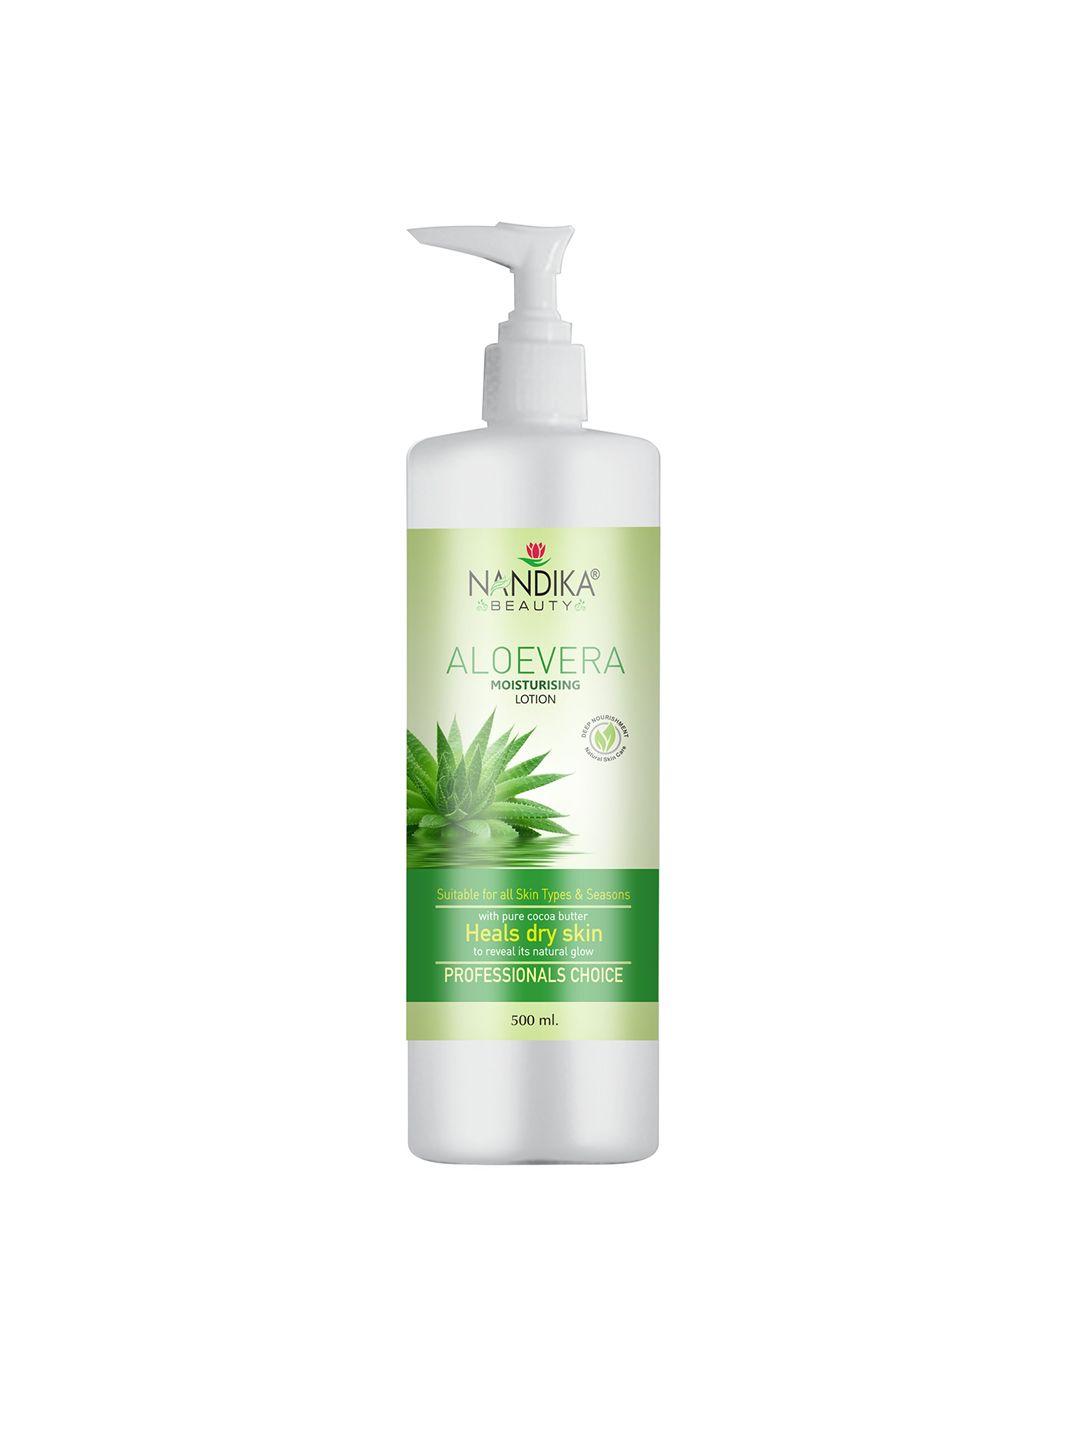 nandika beauty aloe vera moisturizing lotion for healing dry skin - 500 ml